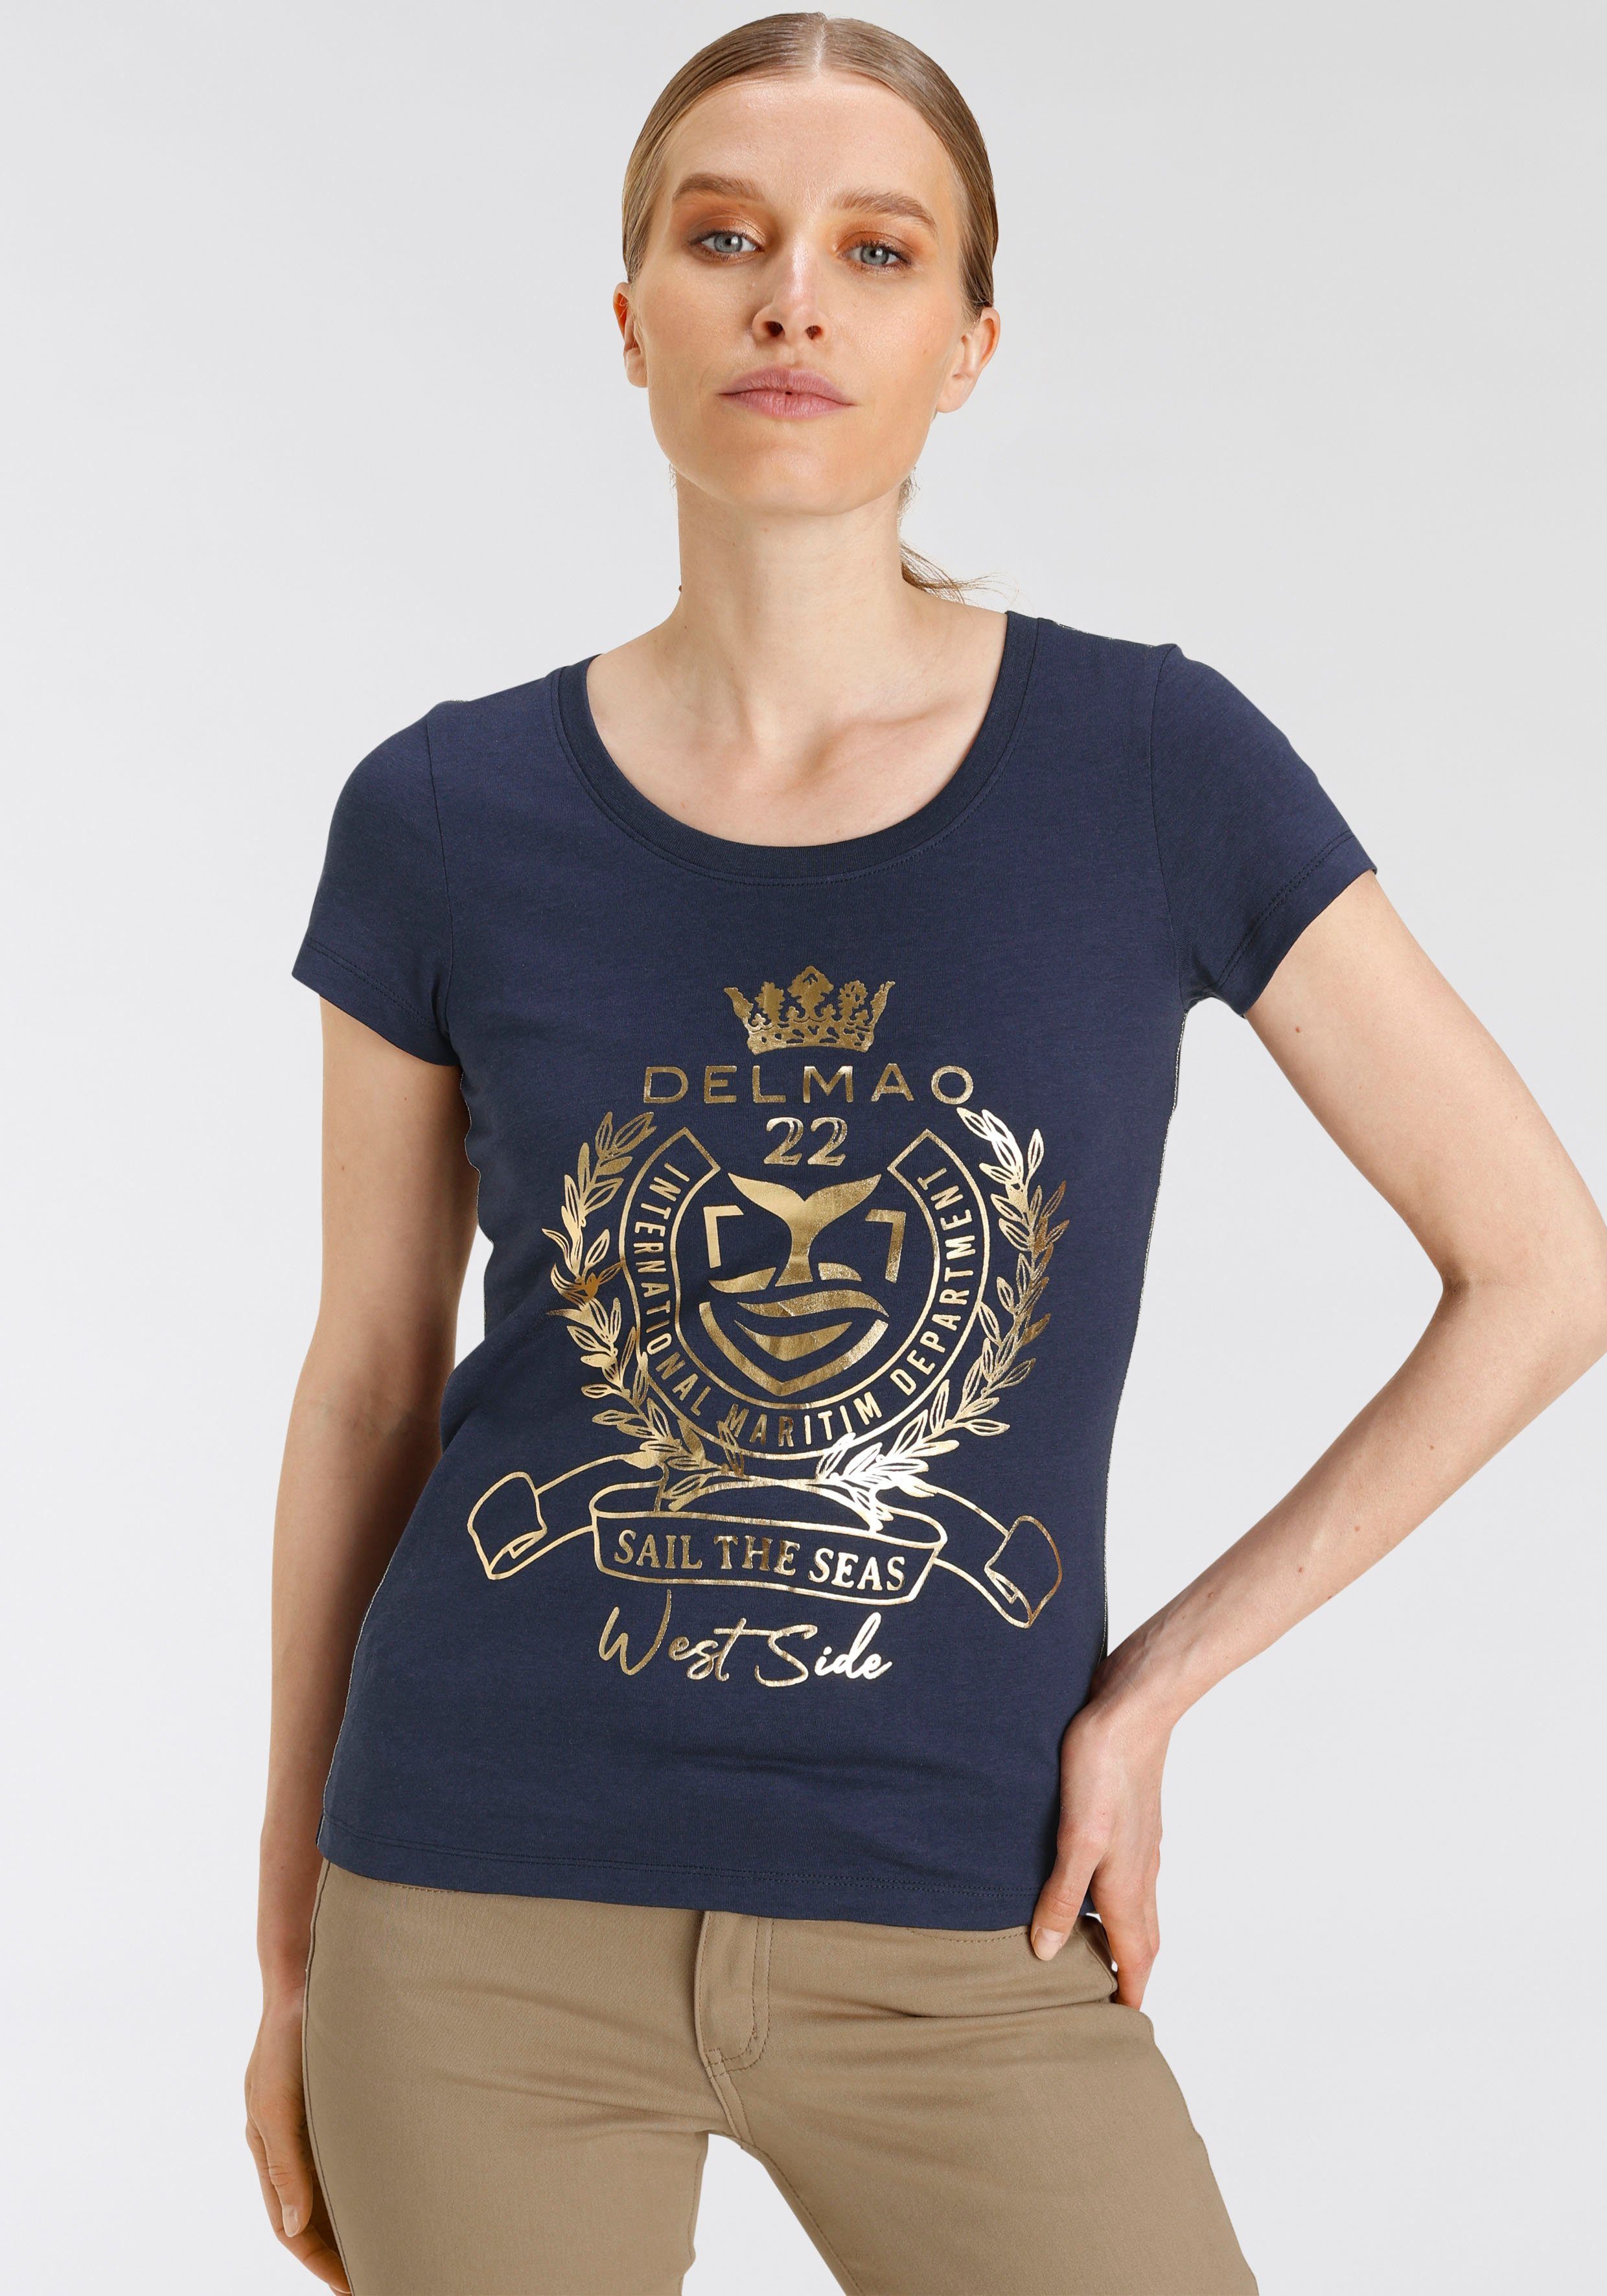 DELMAO T-Shirt mit hochwertigem, goldfarbenem Folienprint - NEUE MARKE! | T-Shirts